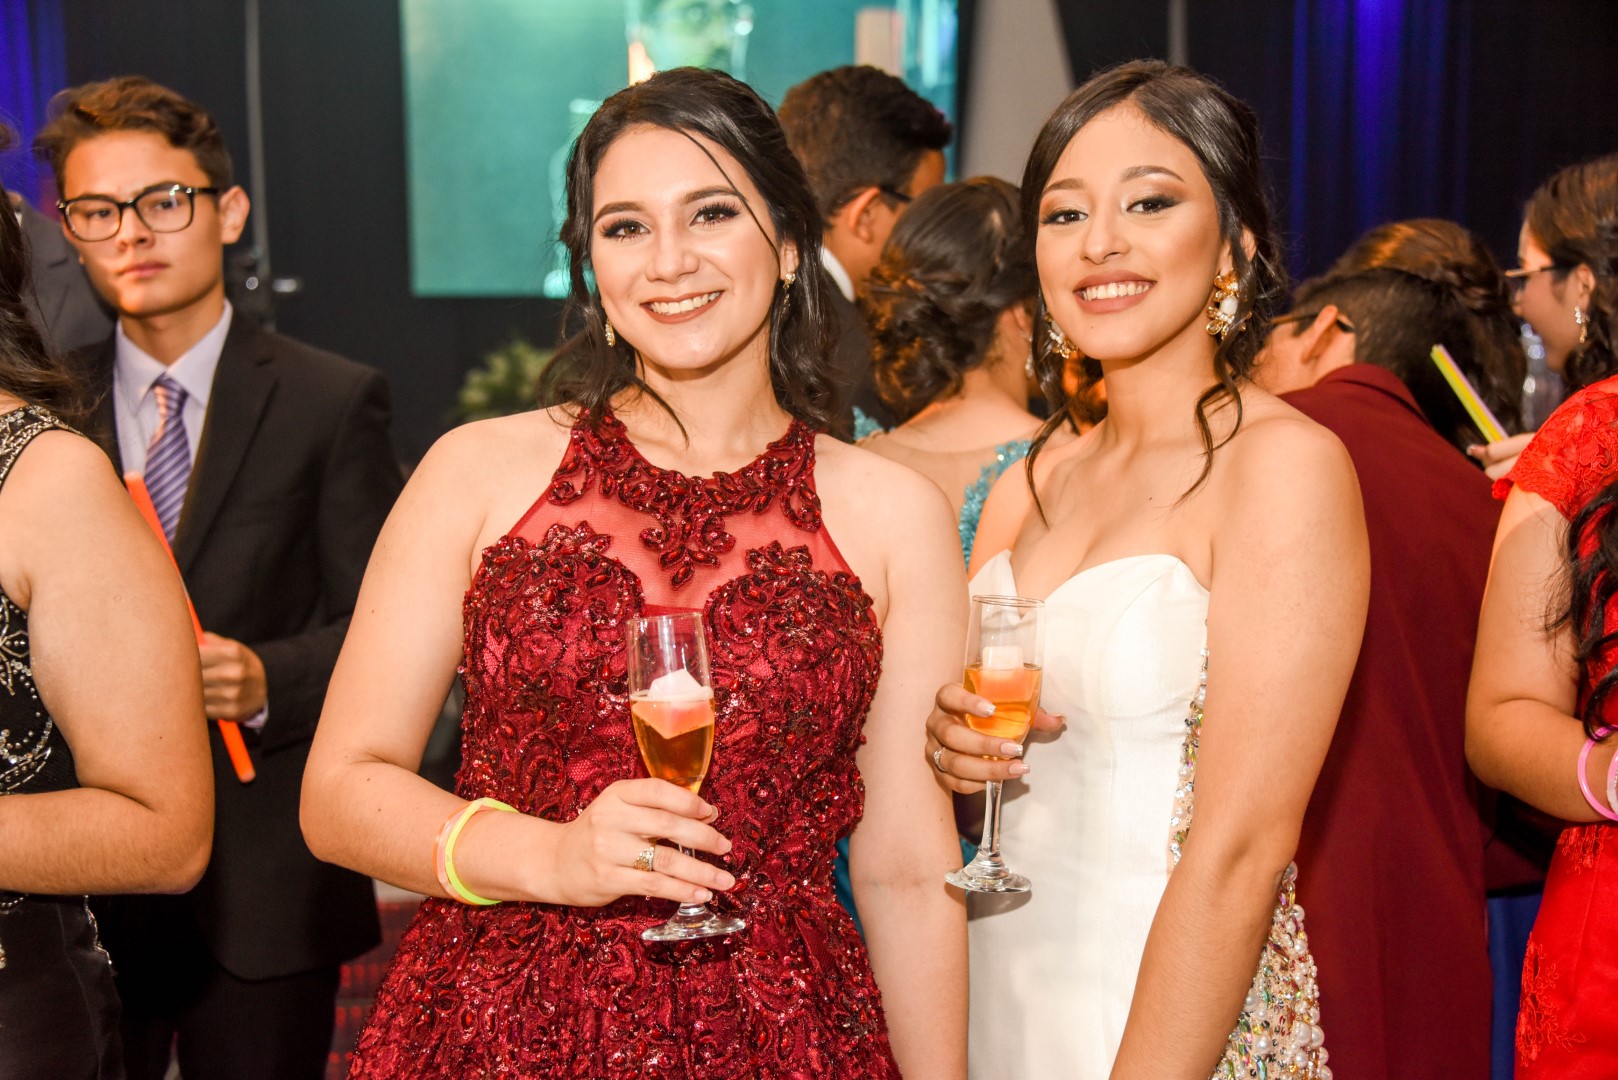 Senior Prom The Mayan School 2019